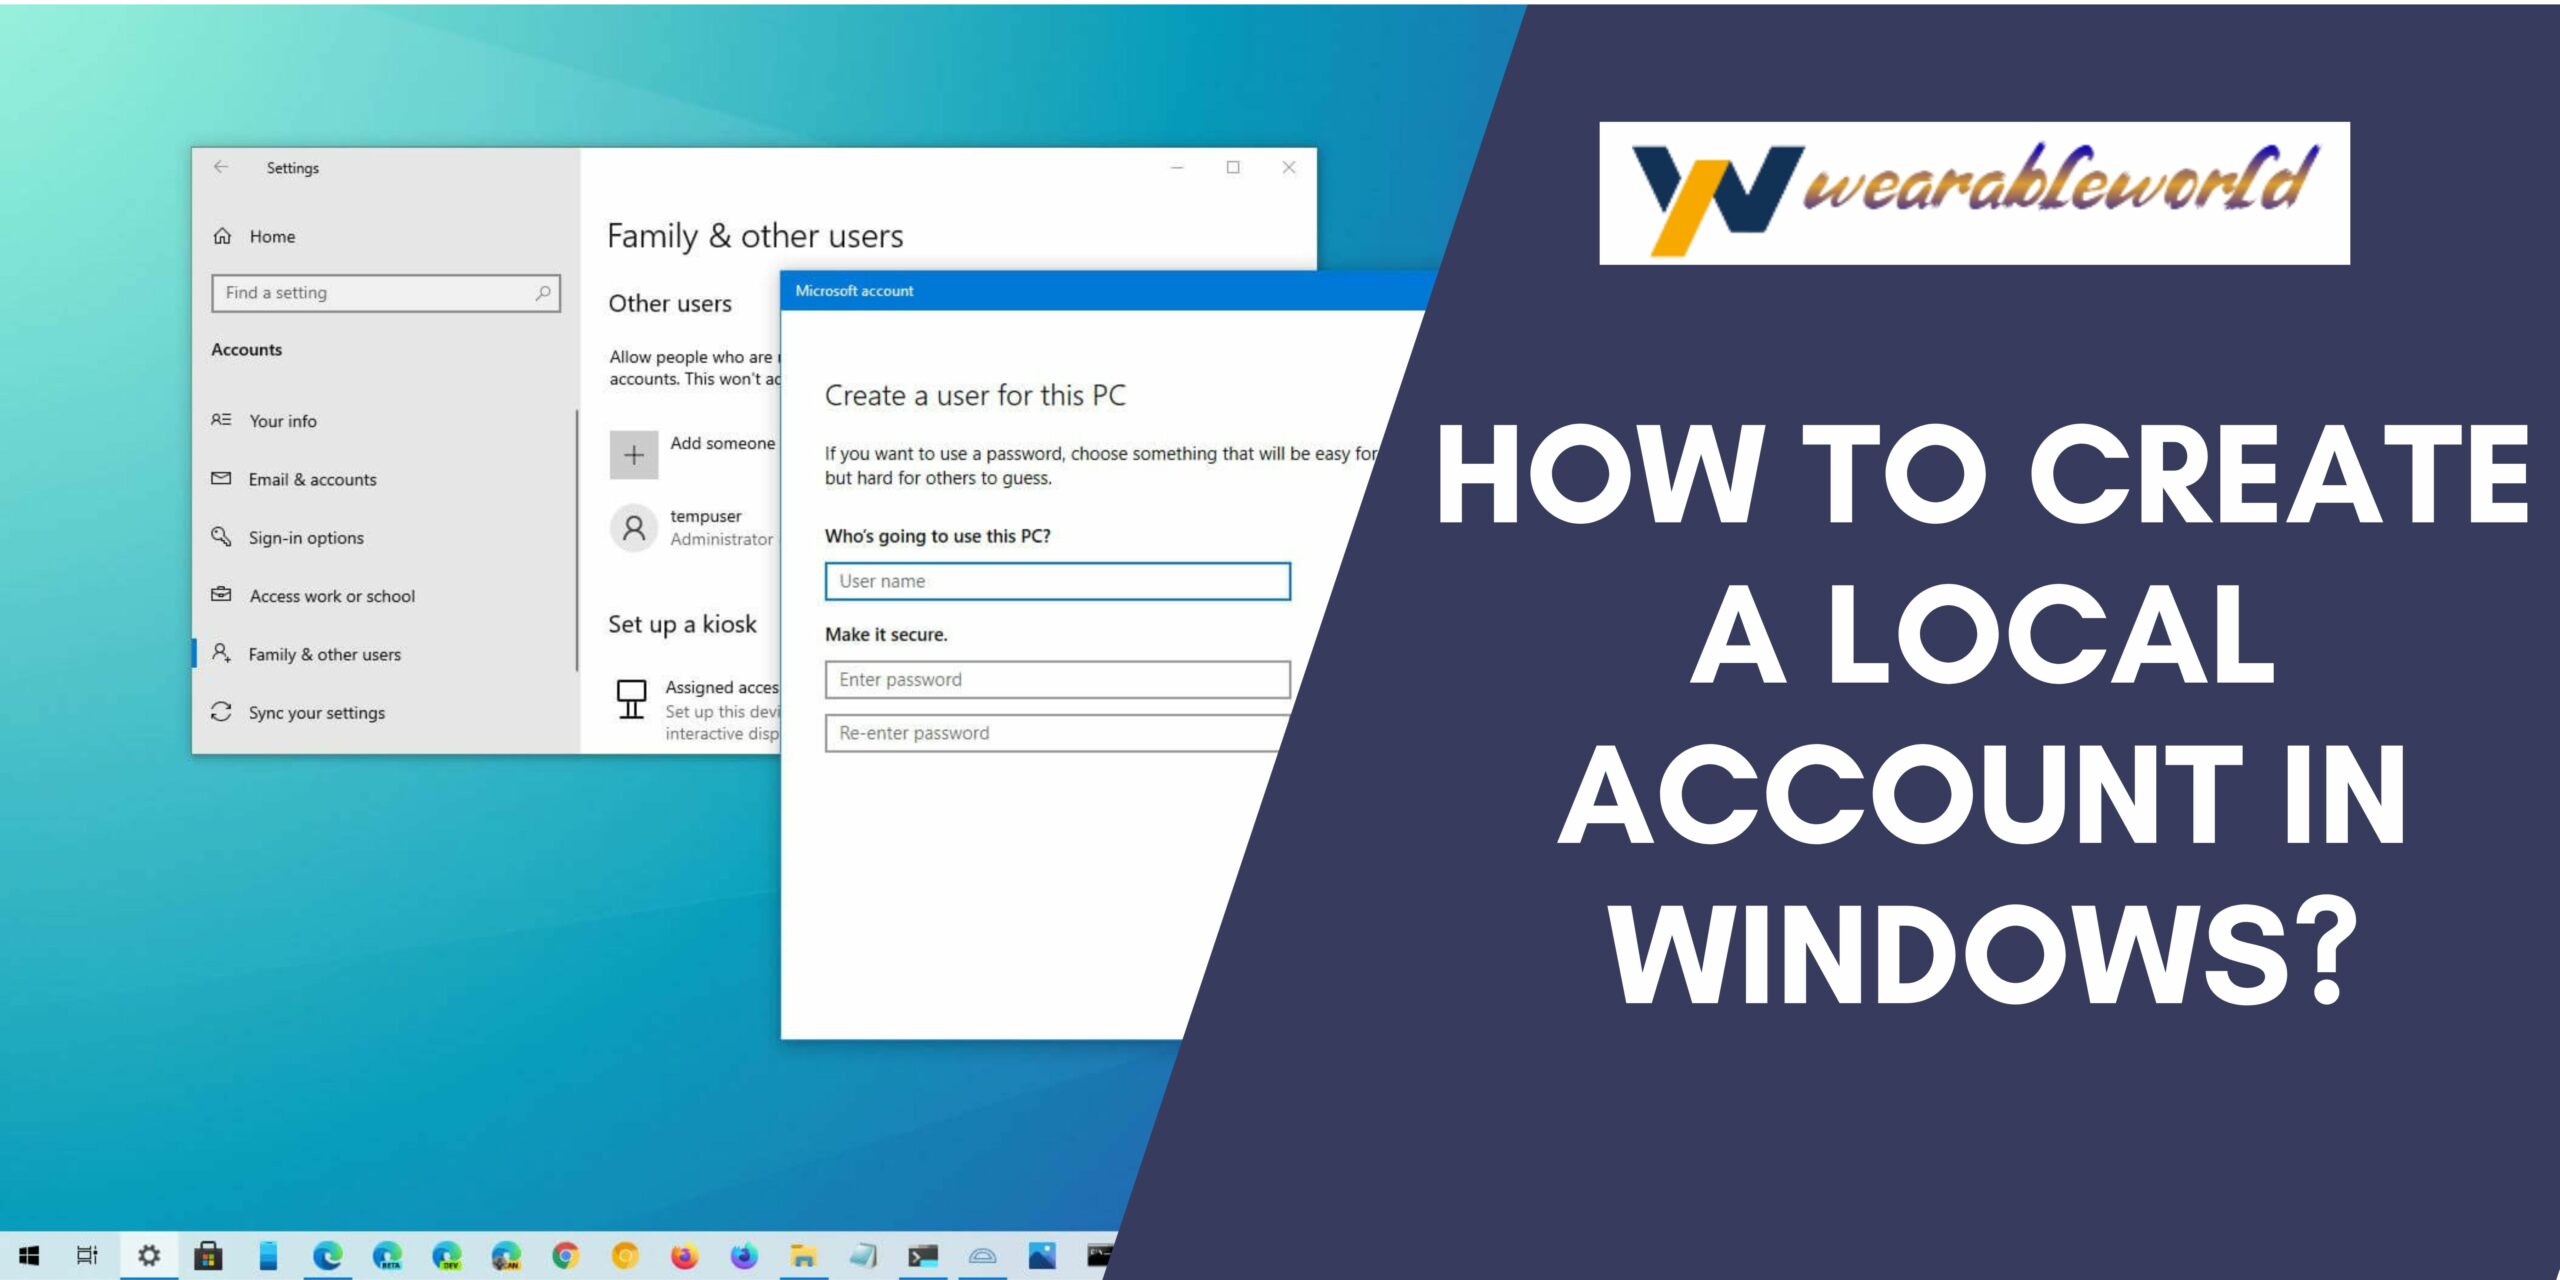 Create a local account in Windows